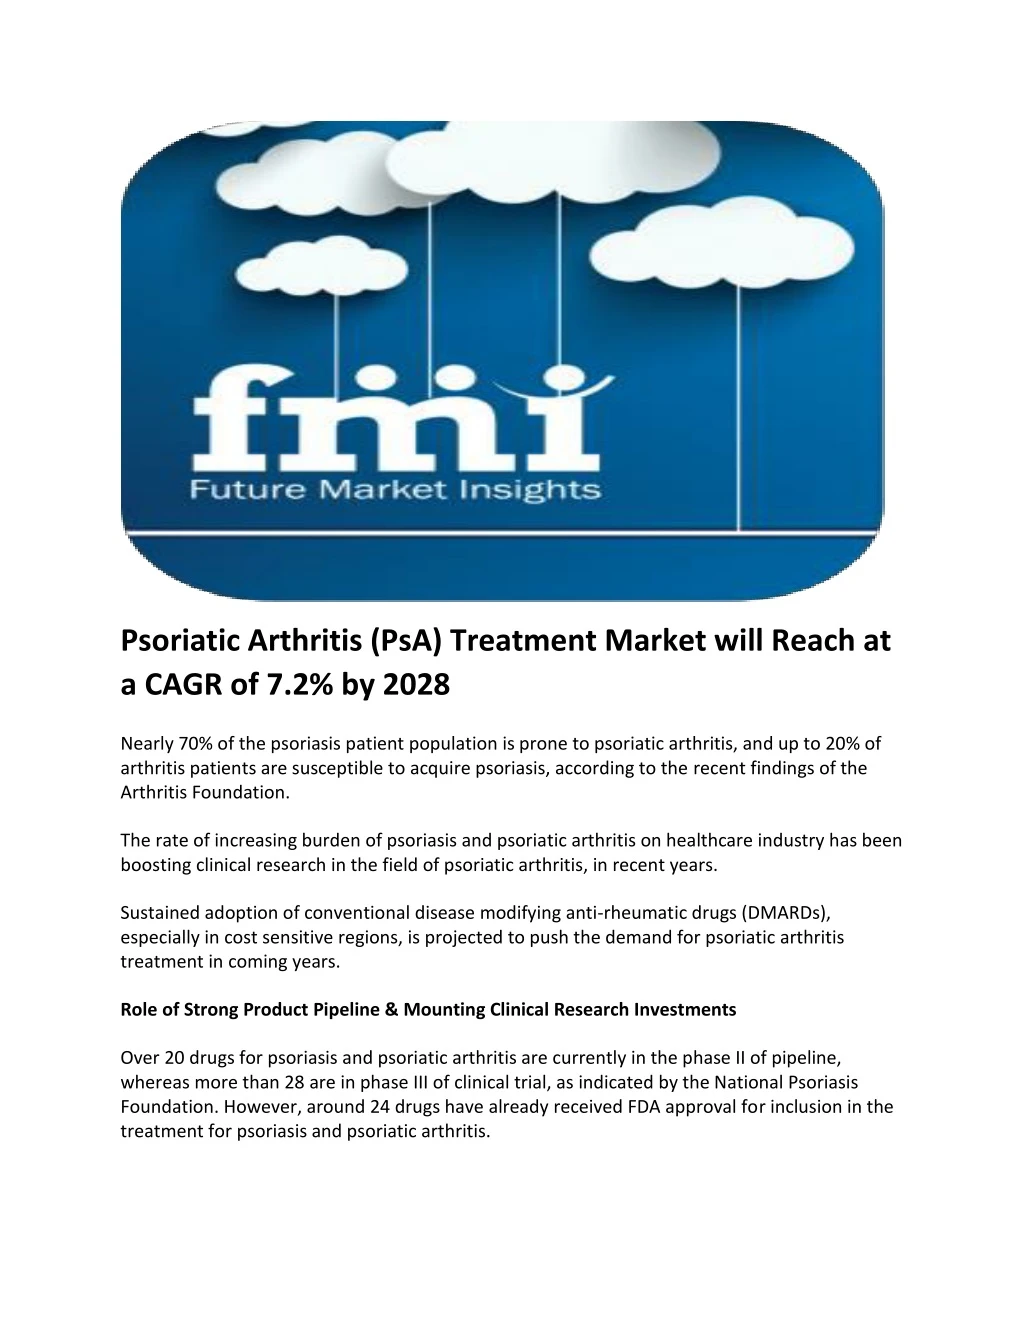 psoriatic arthritis psa treatment market will